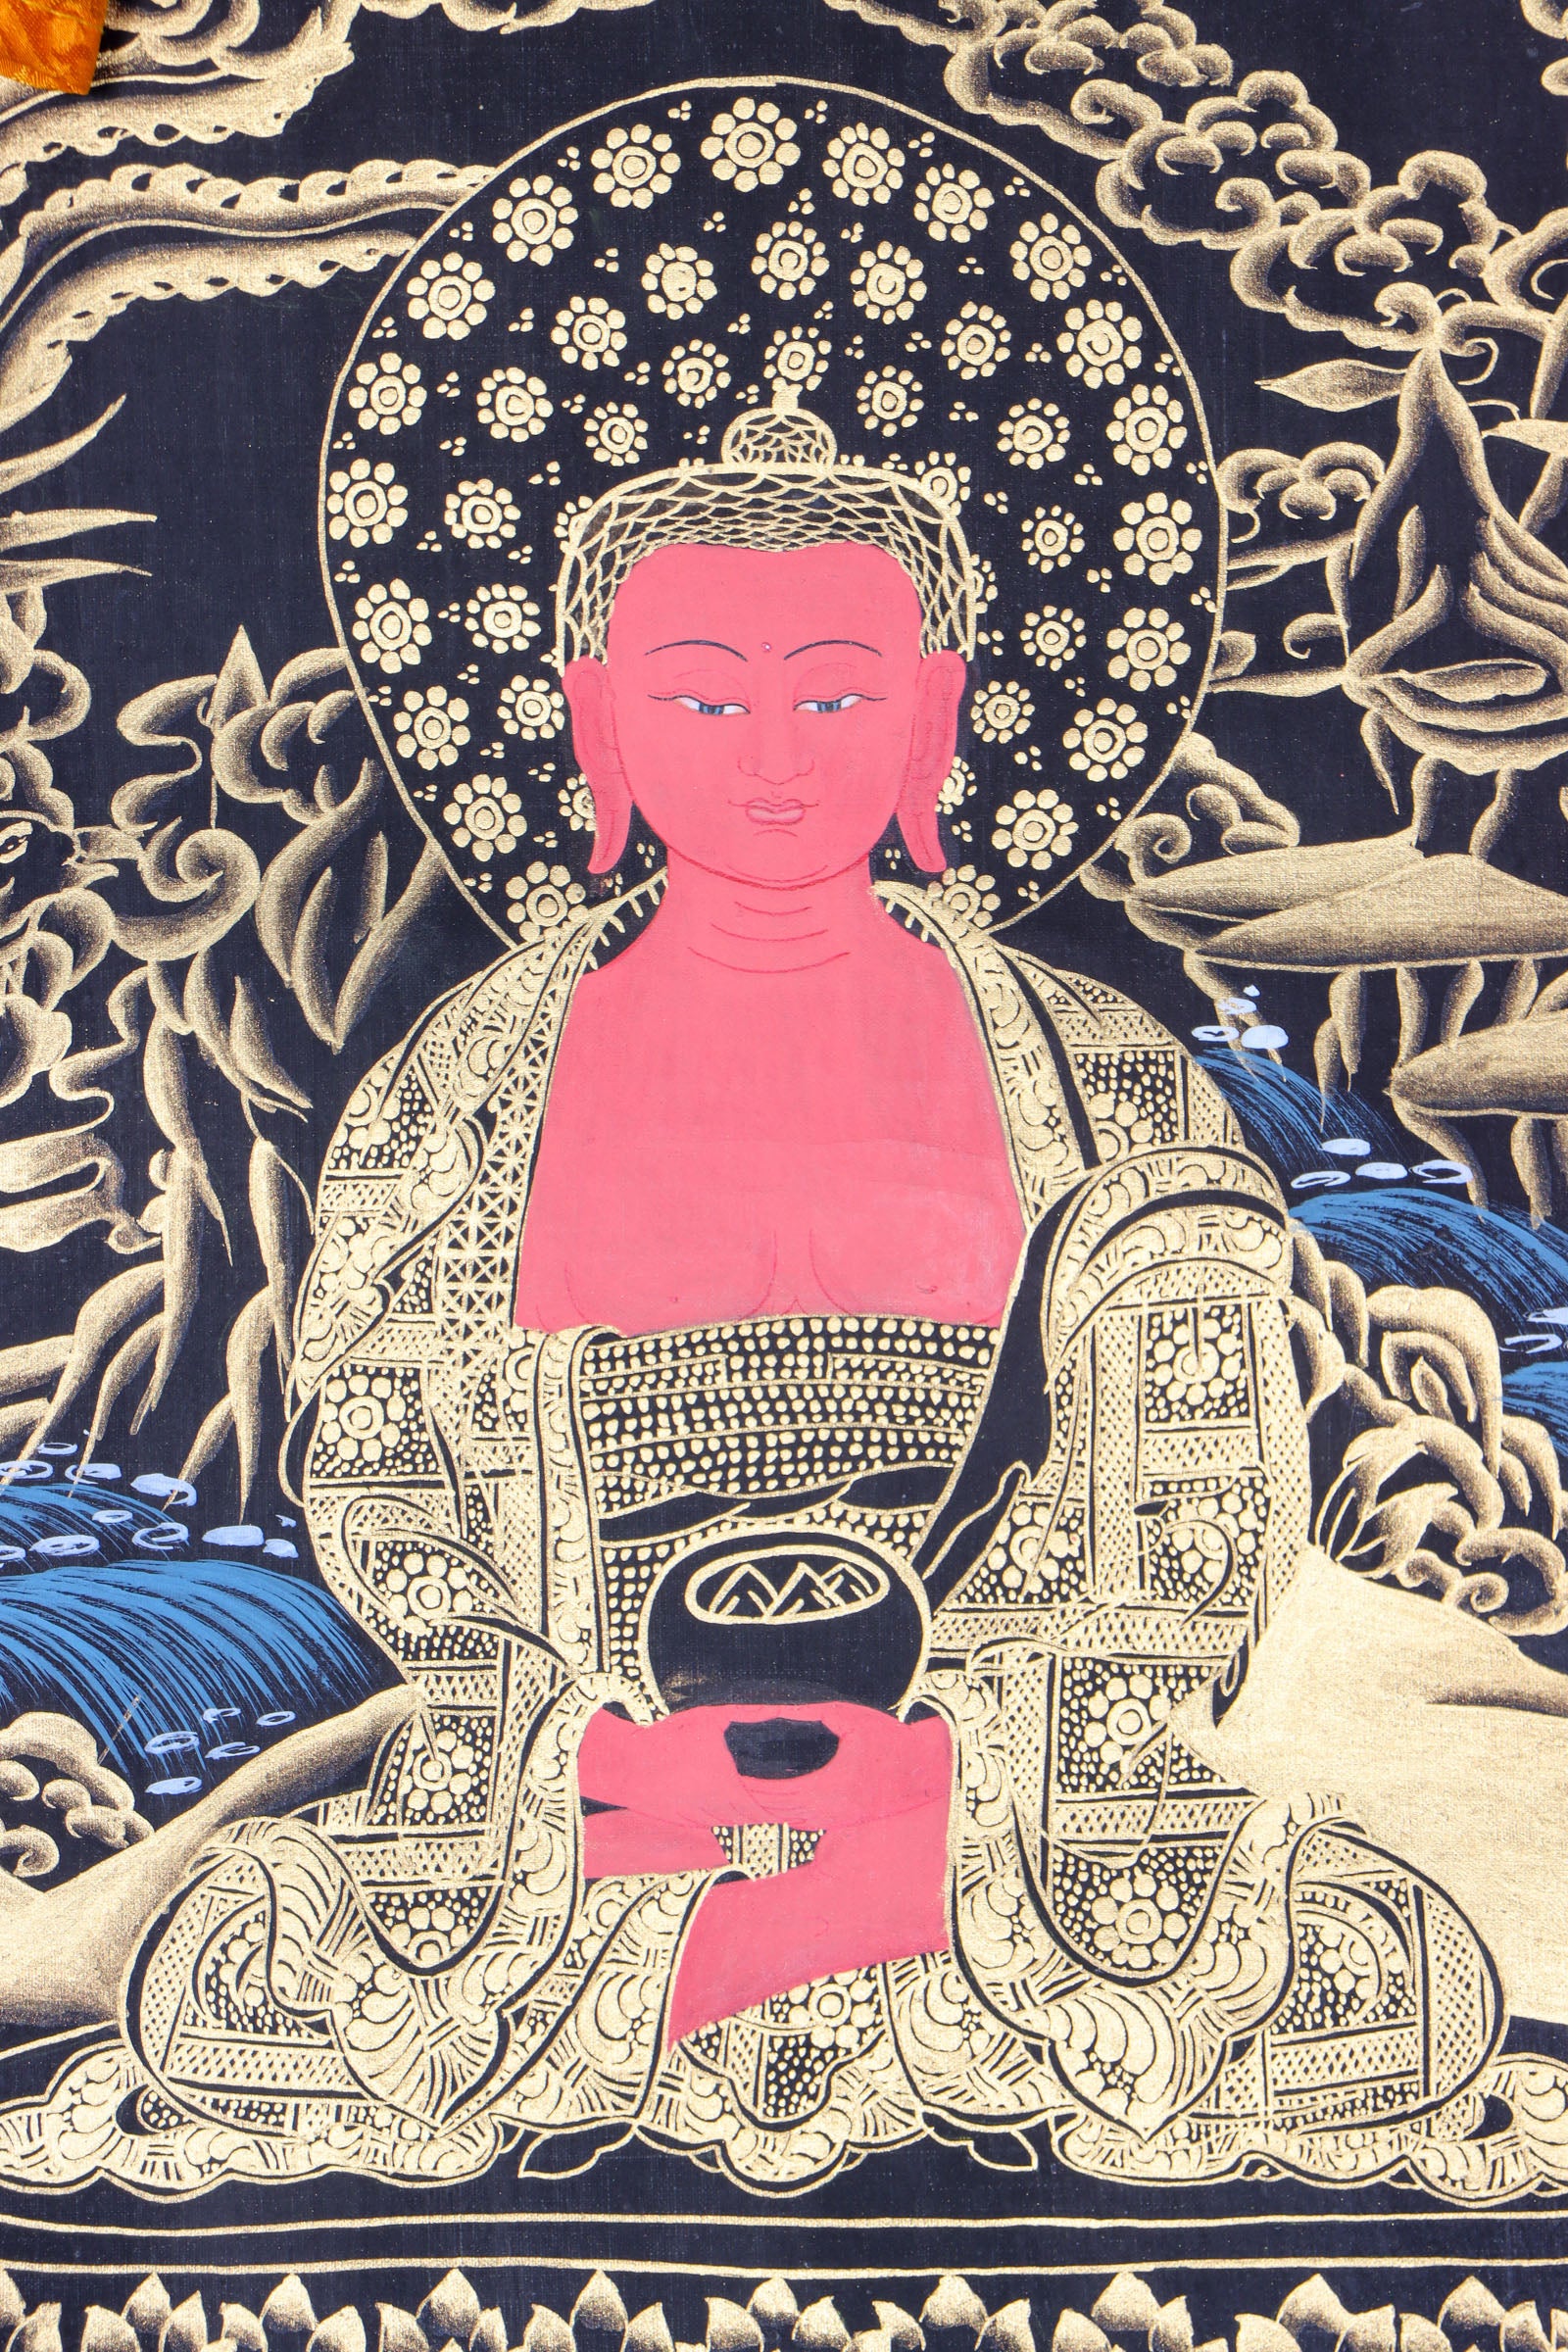 Shakyamuni Buddha Brocade Thangka for meditation.